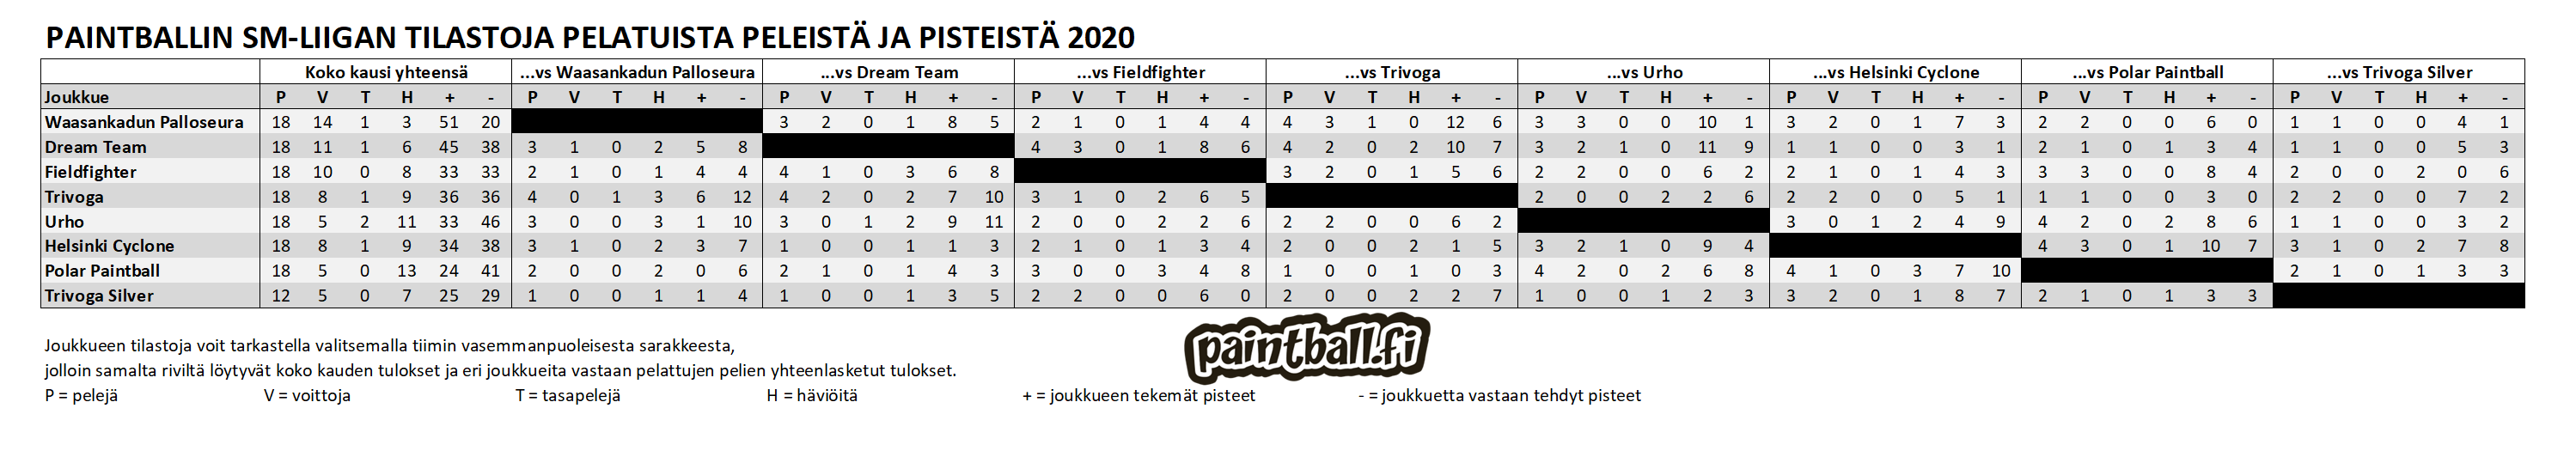 2020_smliiga_tilastot.PNG